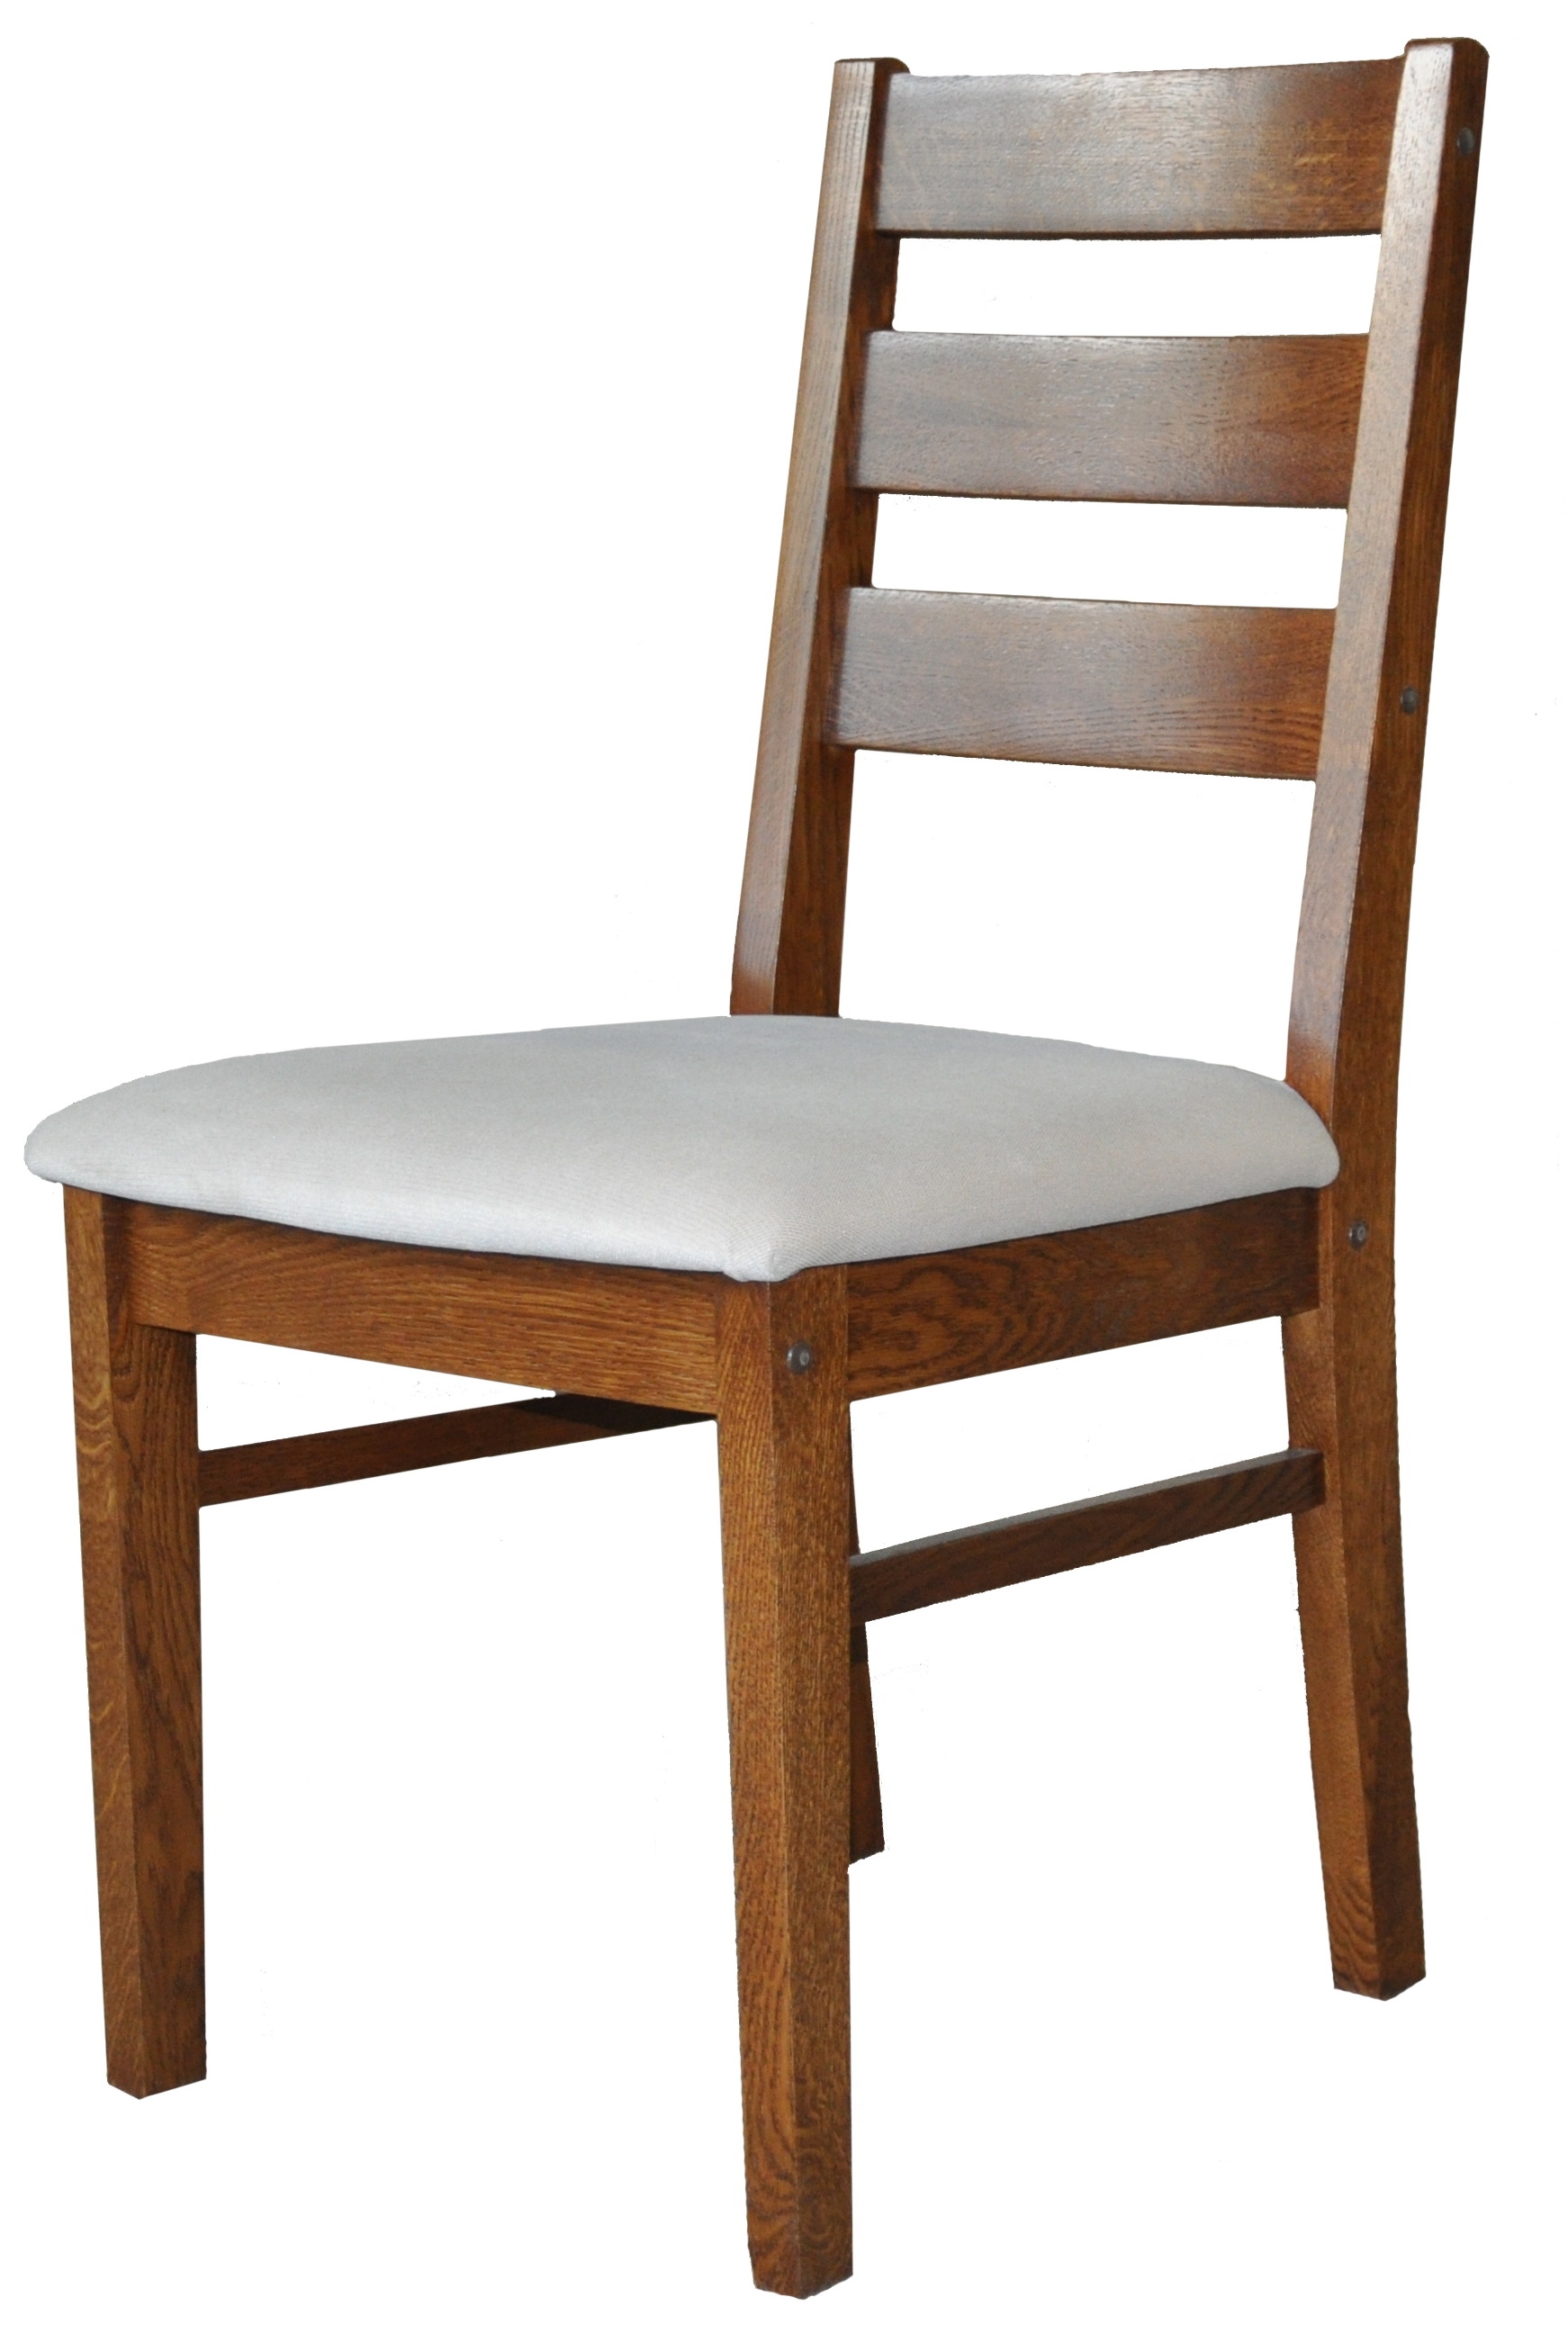 стул деревянный производство беларусь